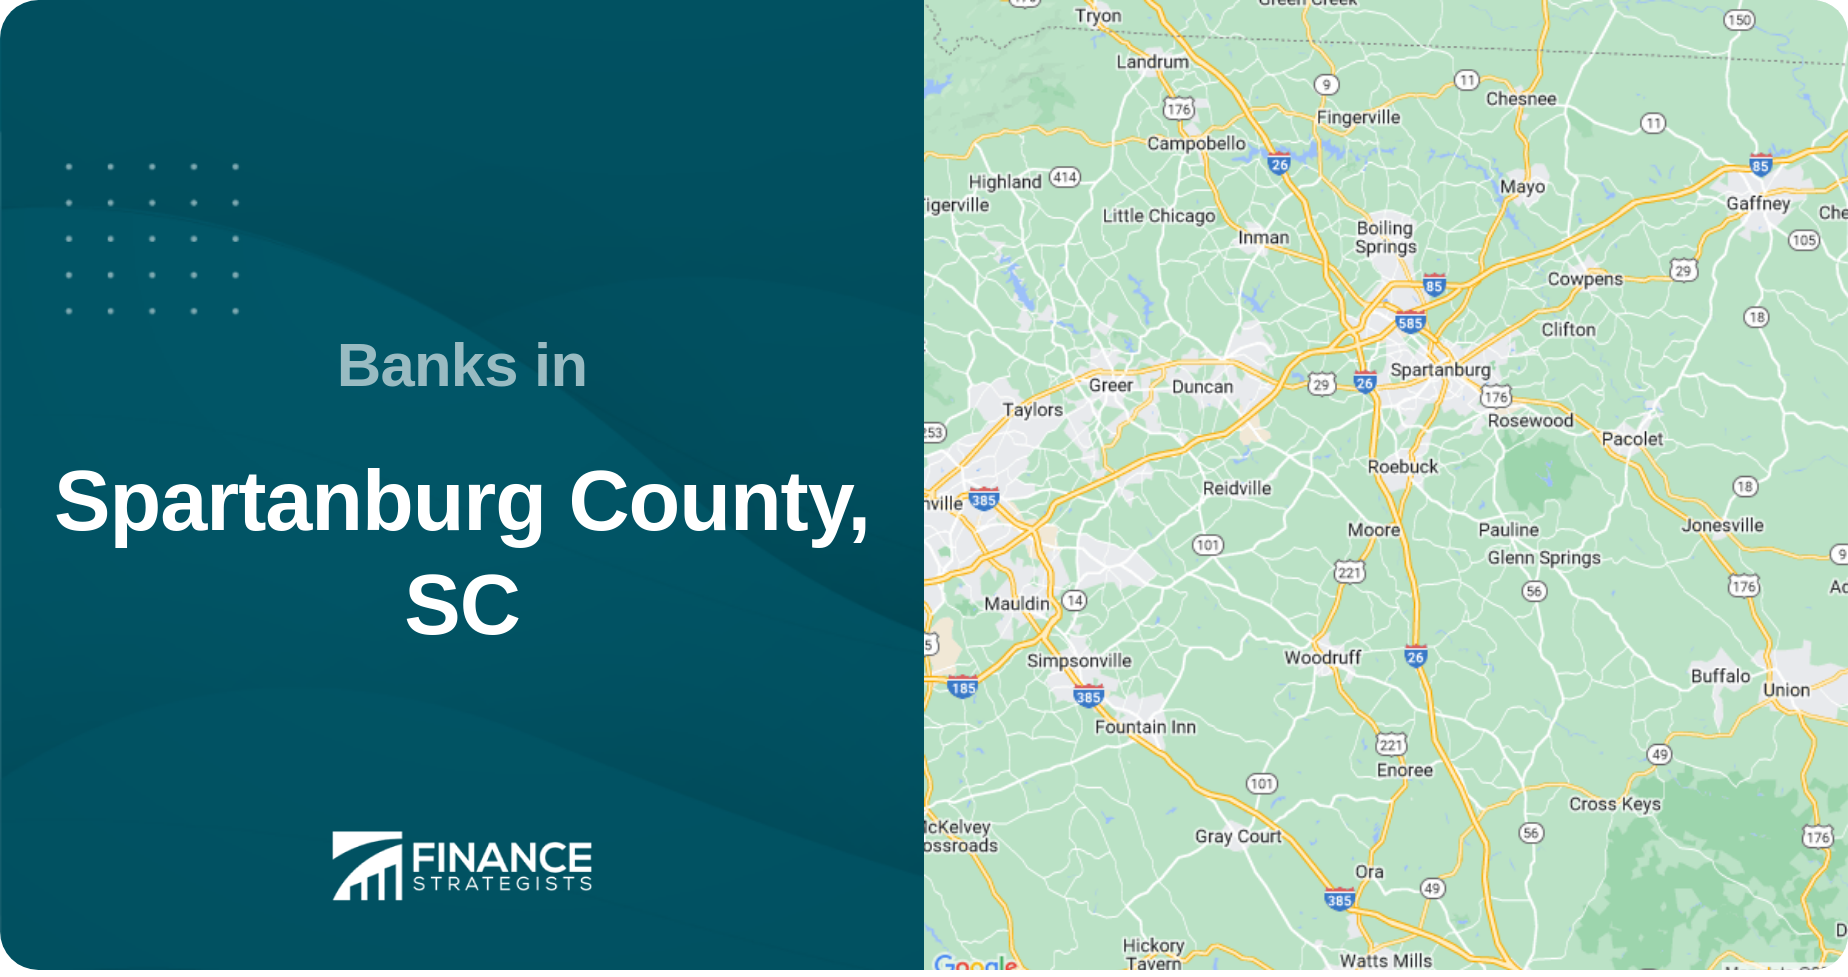 Banks in Spartanburg County, SC